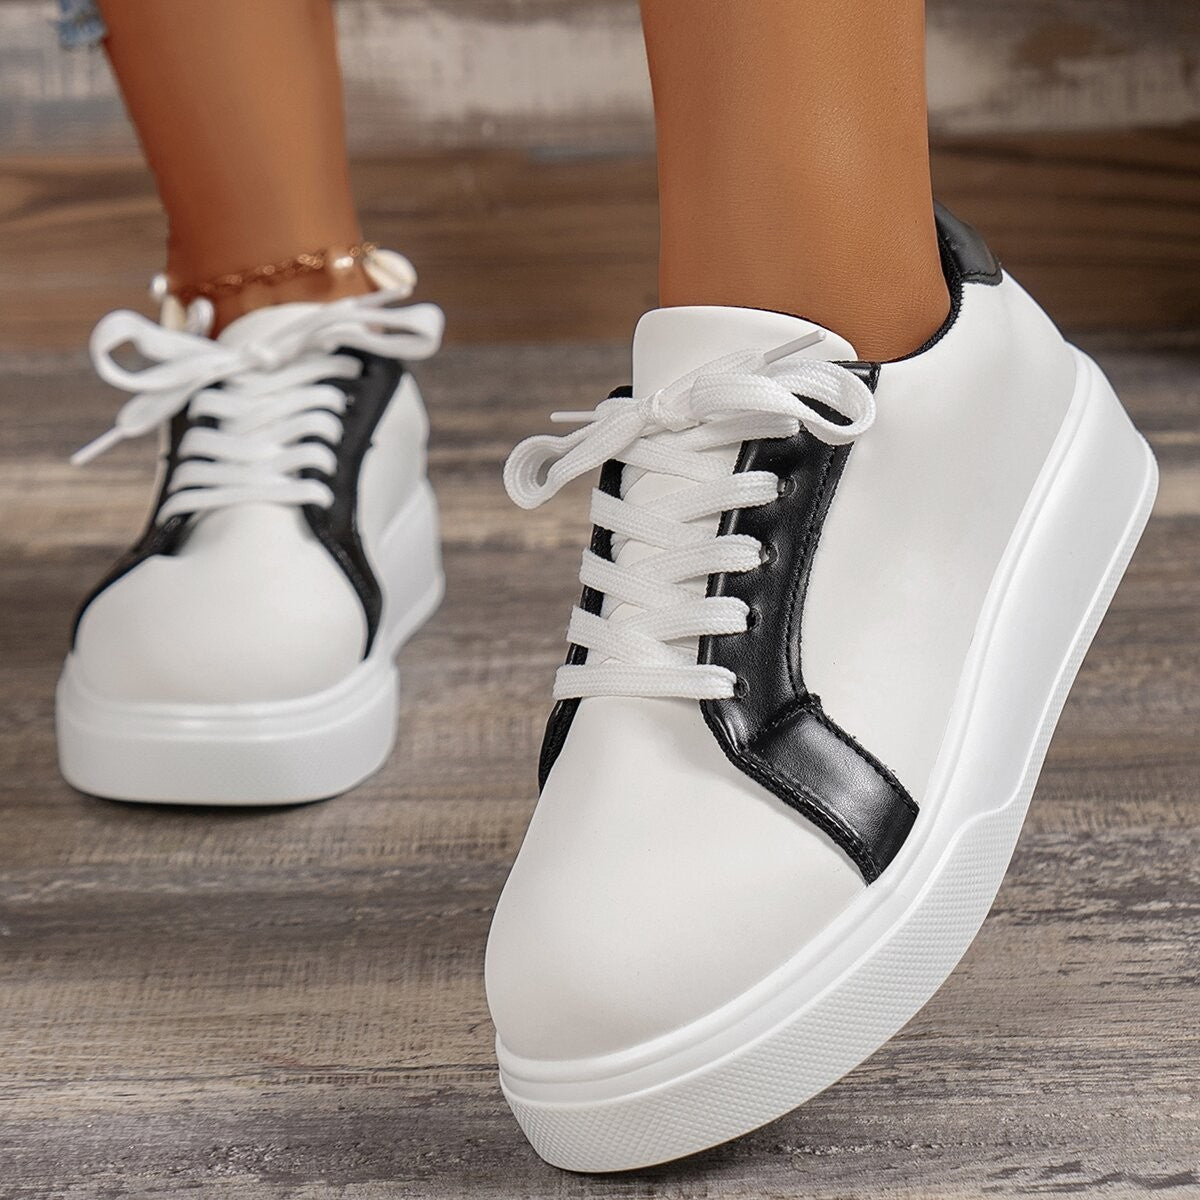 Lovemi -  Lace-up Flats Women Walking Sports Skateboard Shoes Retro Fashion Casual Sneakers